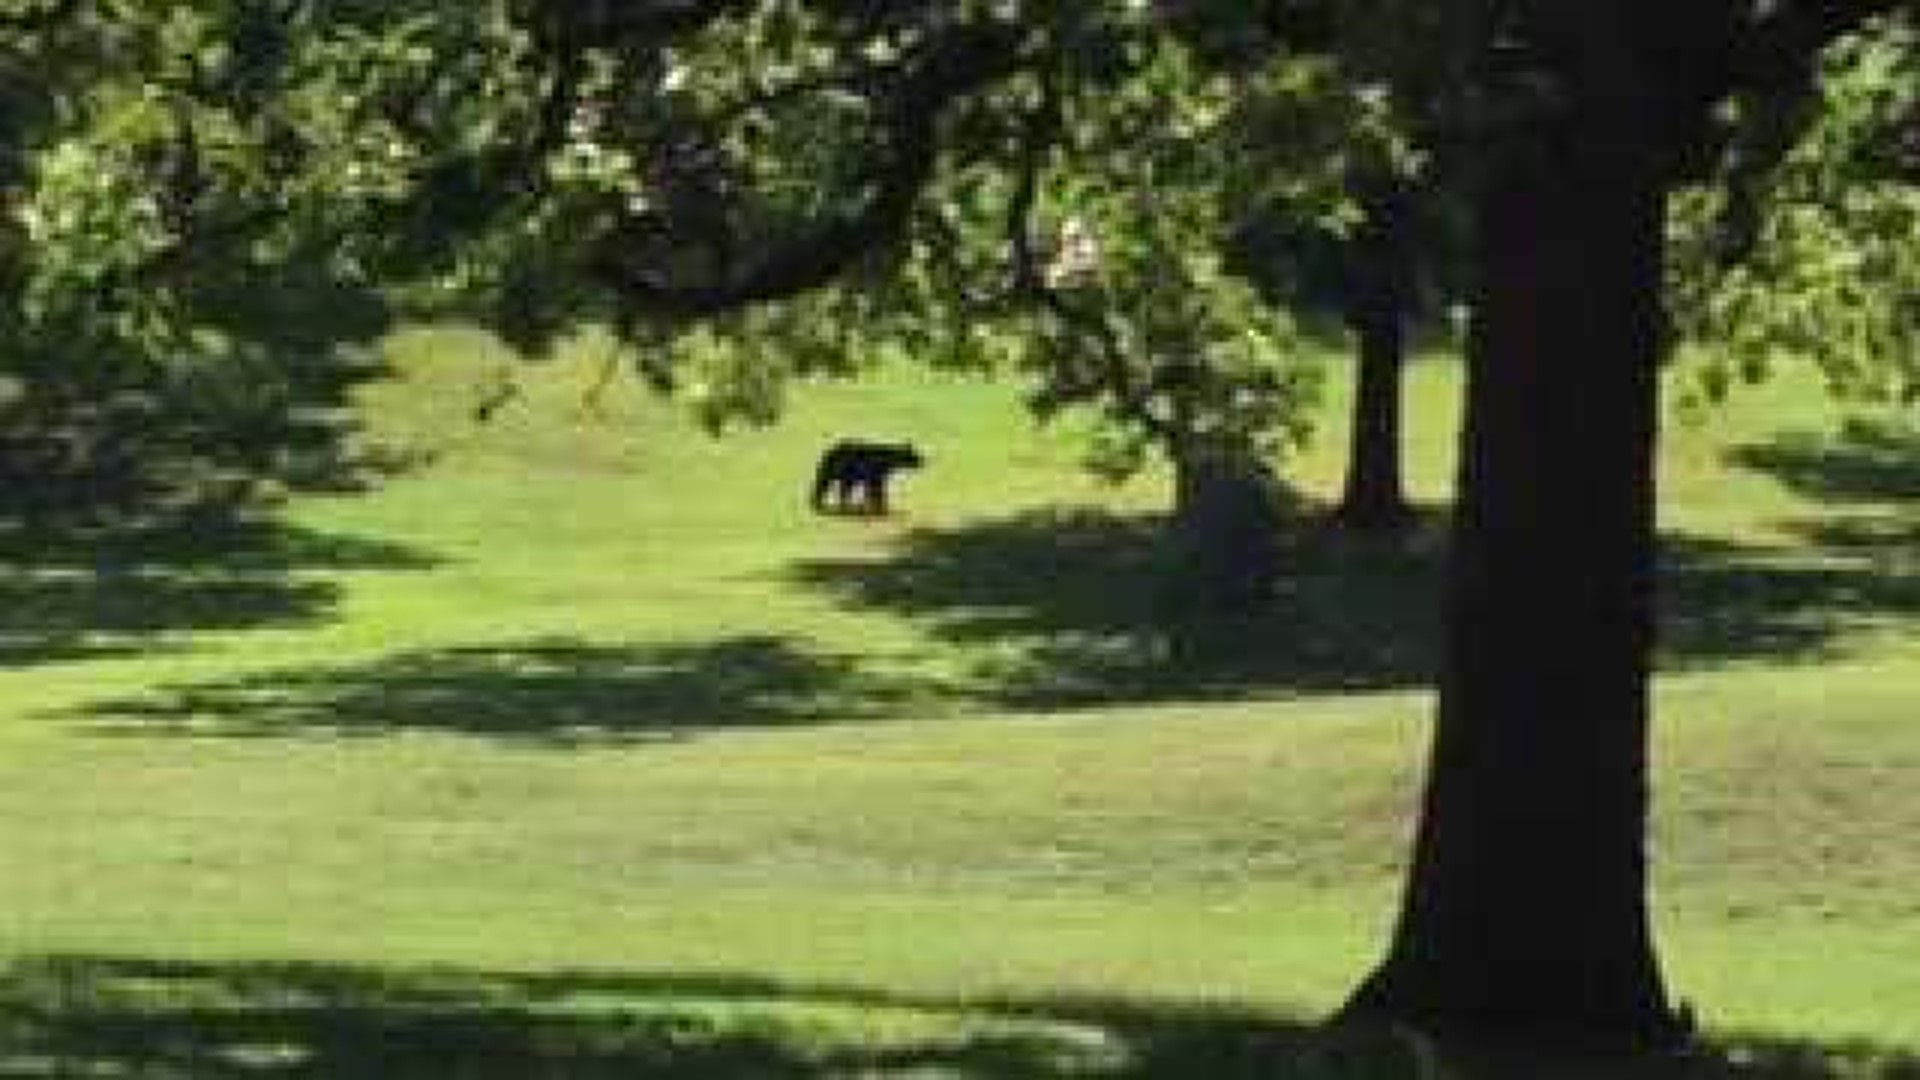 Black Bear still on the loose in Springdale